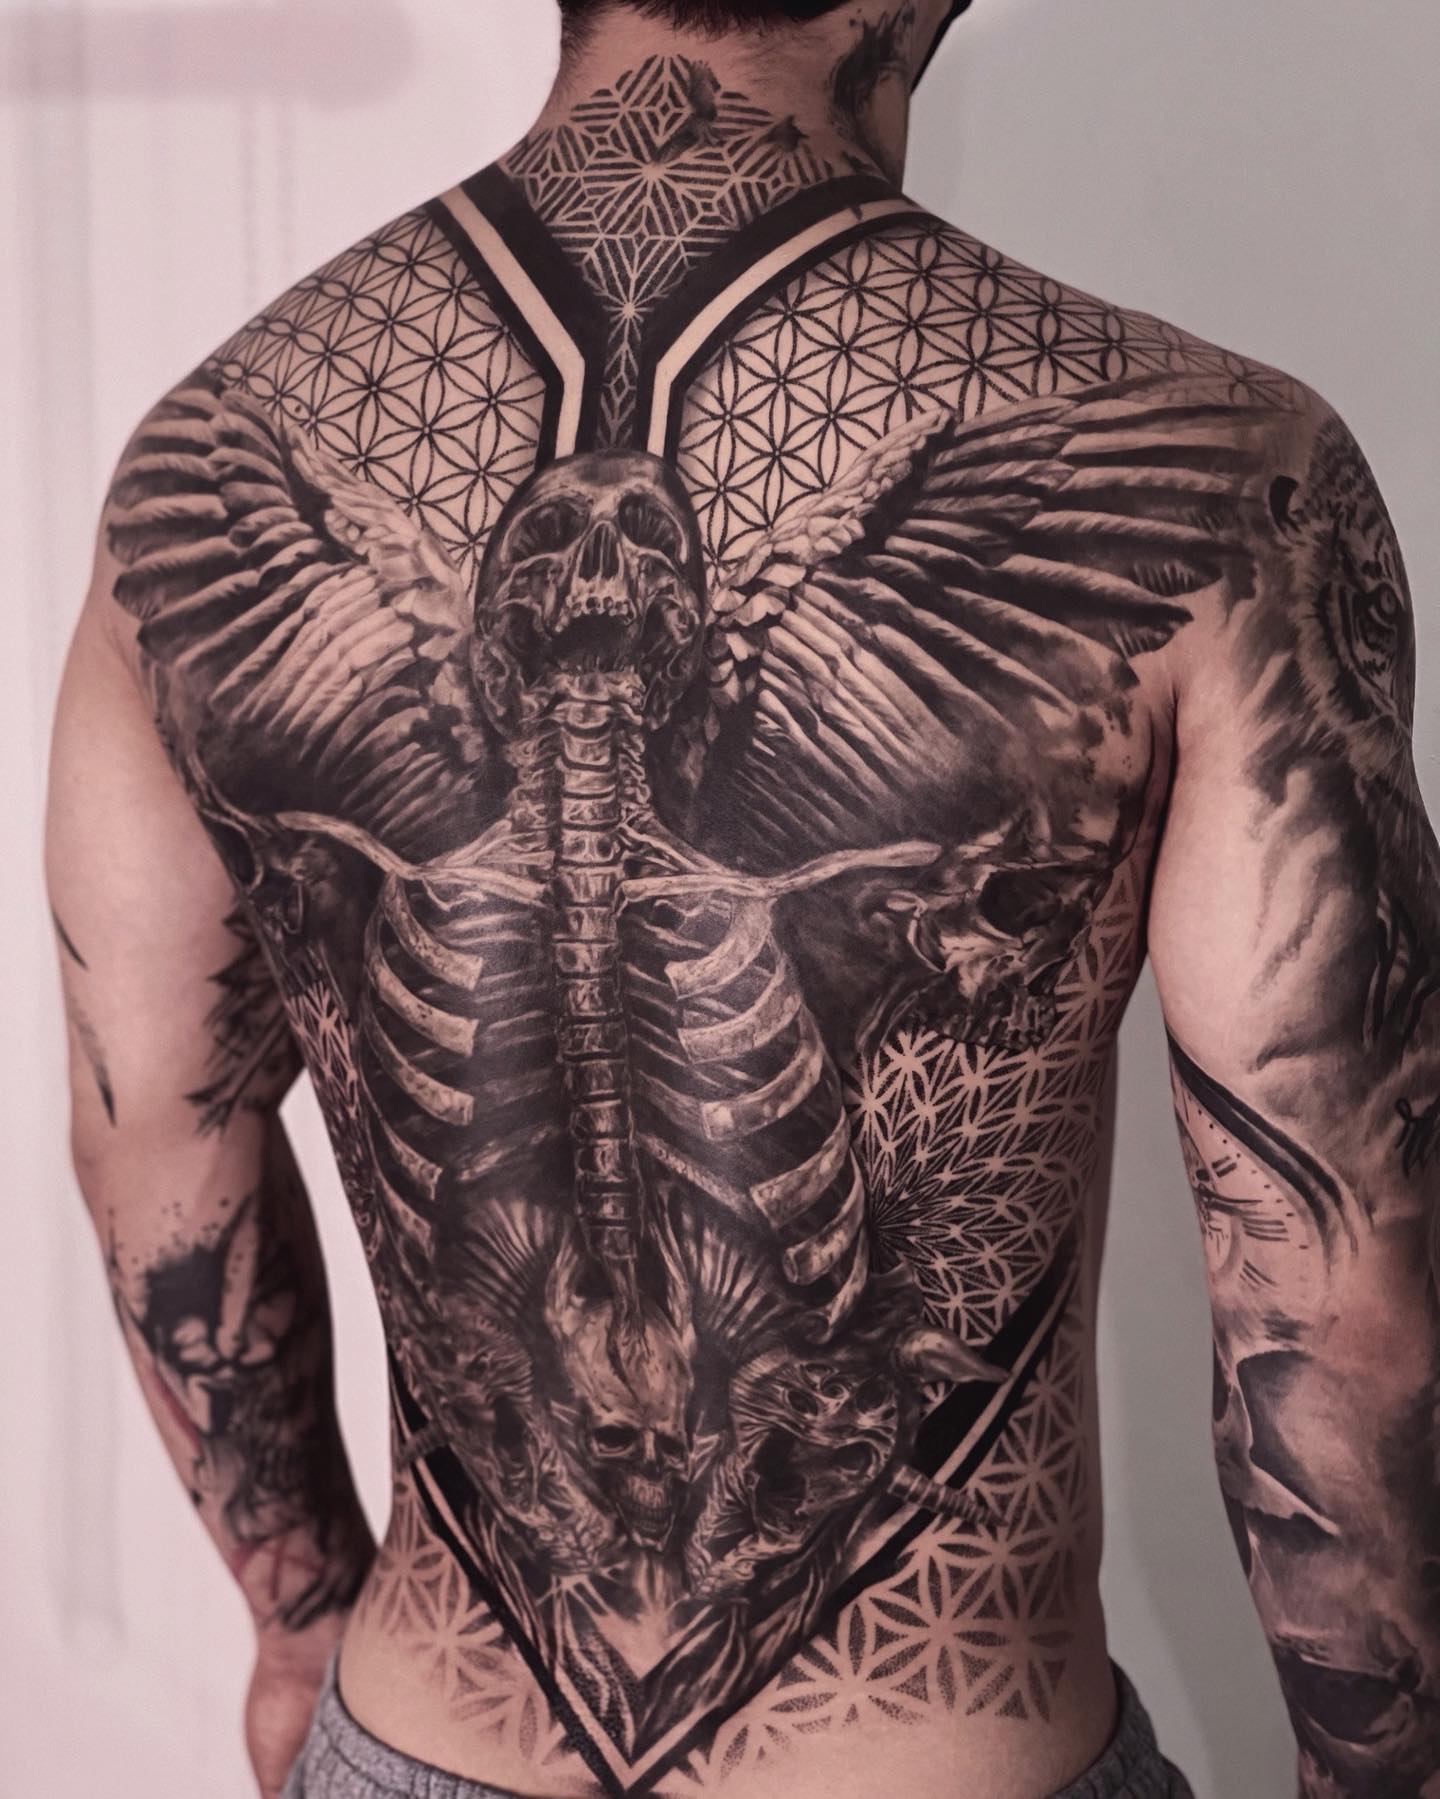 Mixed Styles Tattoo Designs • No Regrets UK